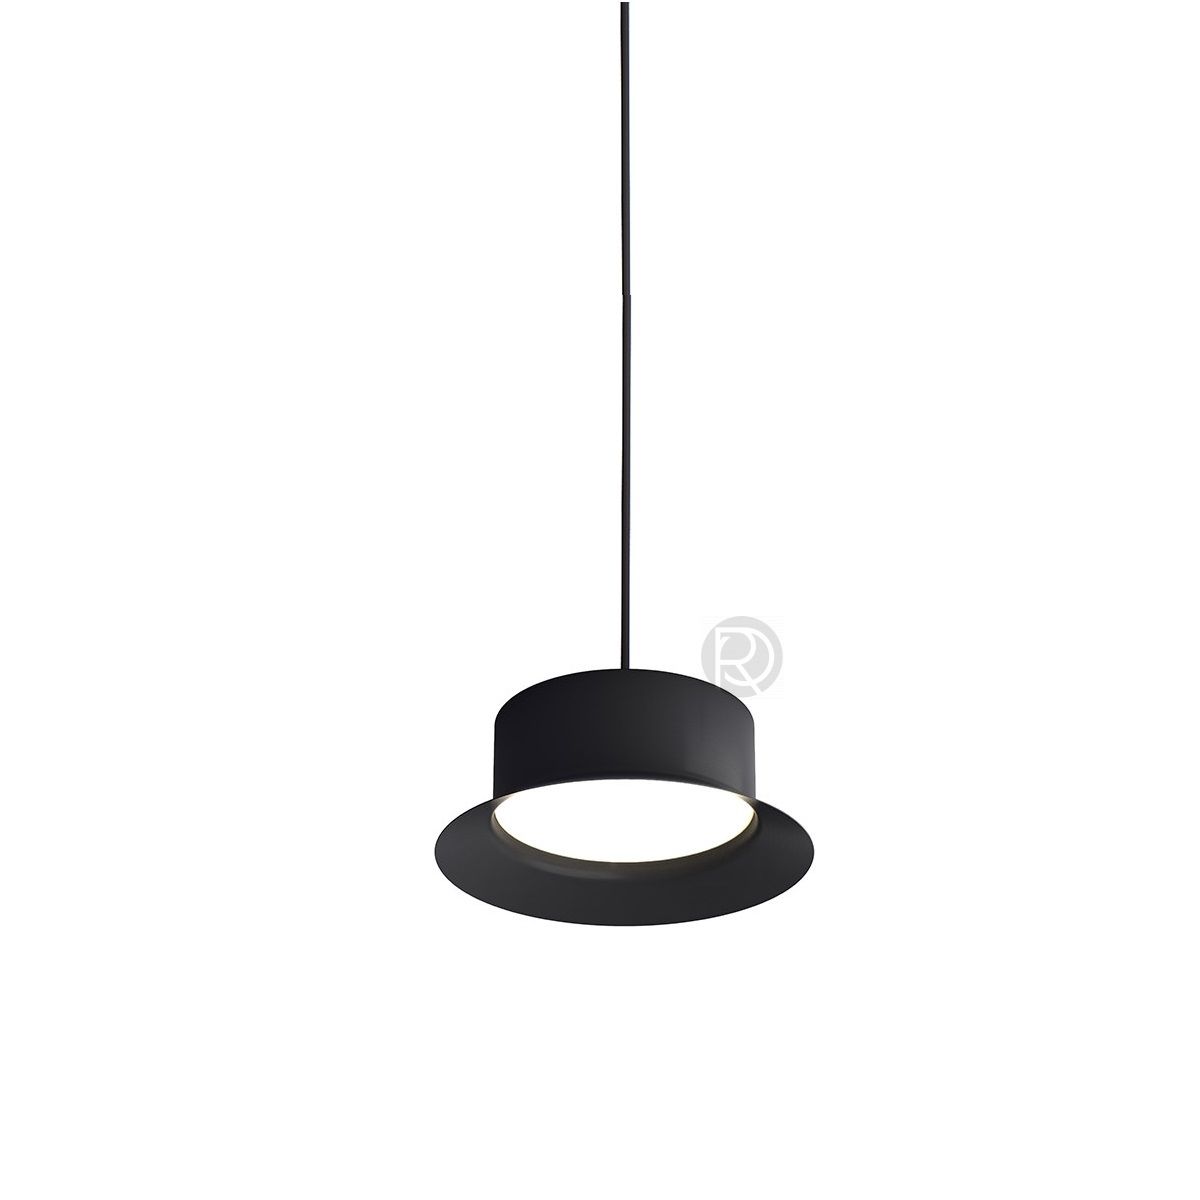 Hanging lamp MAINE by Estiluz